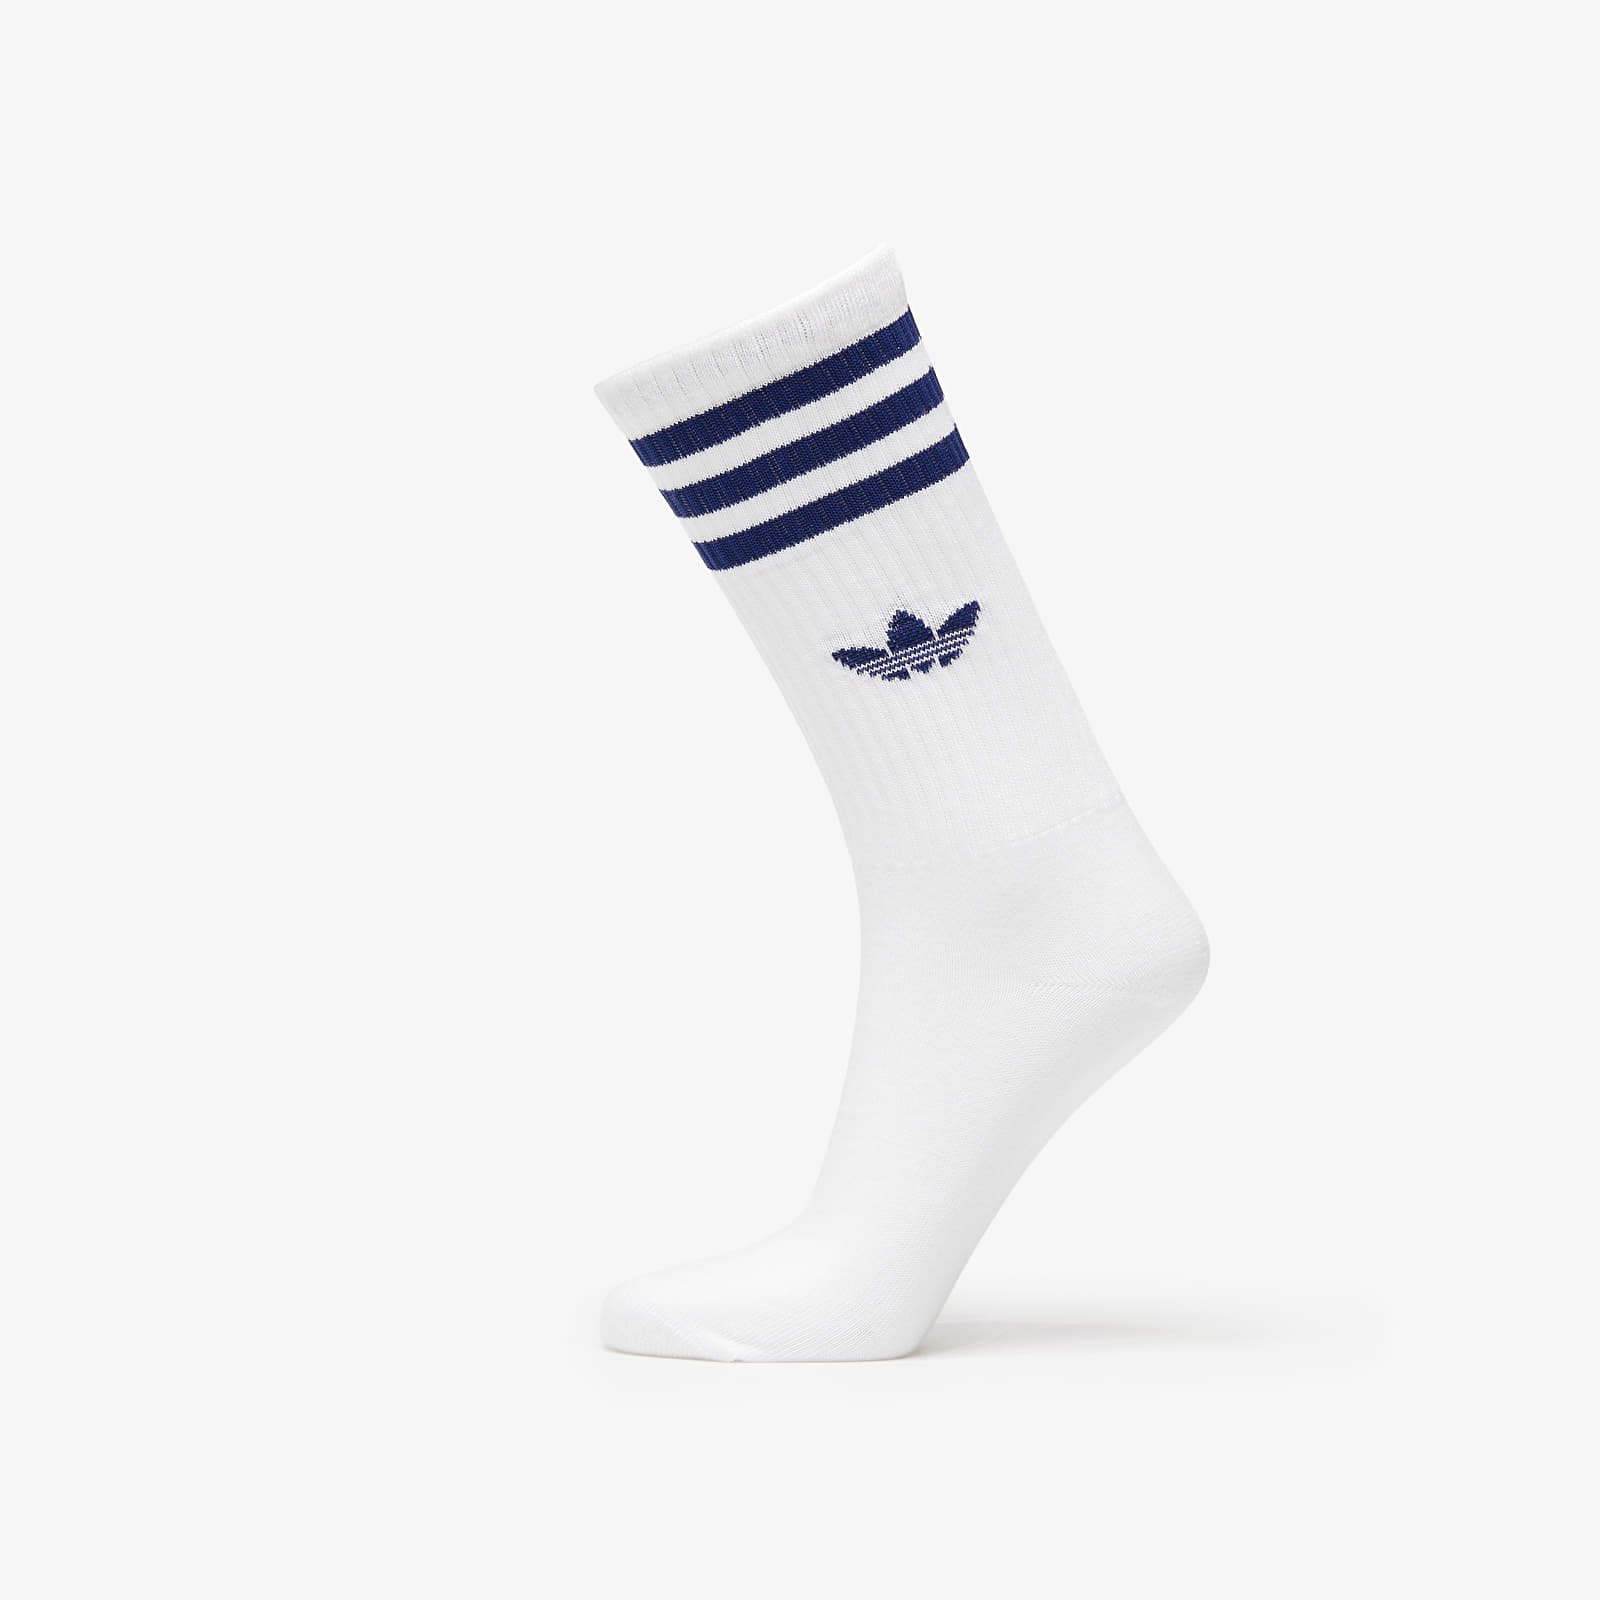 Solid Crew Socks – 3 pairs